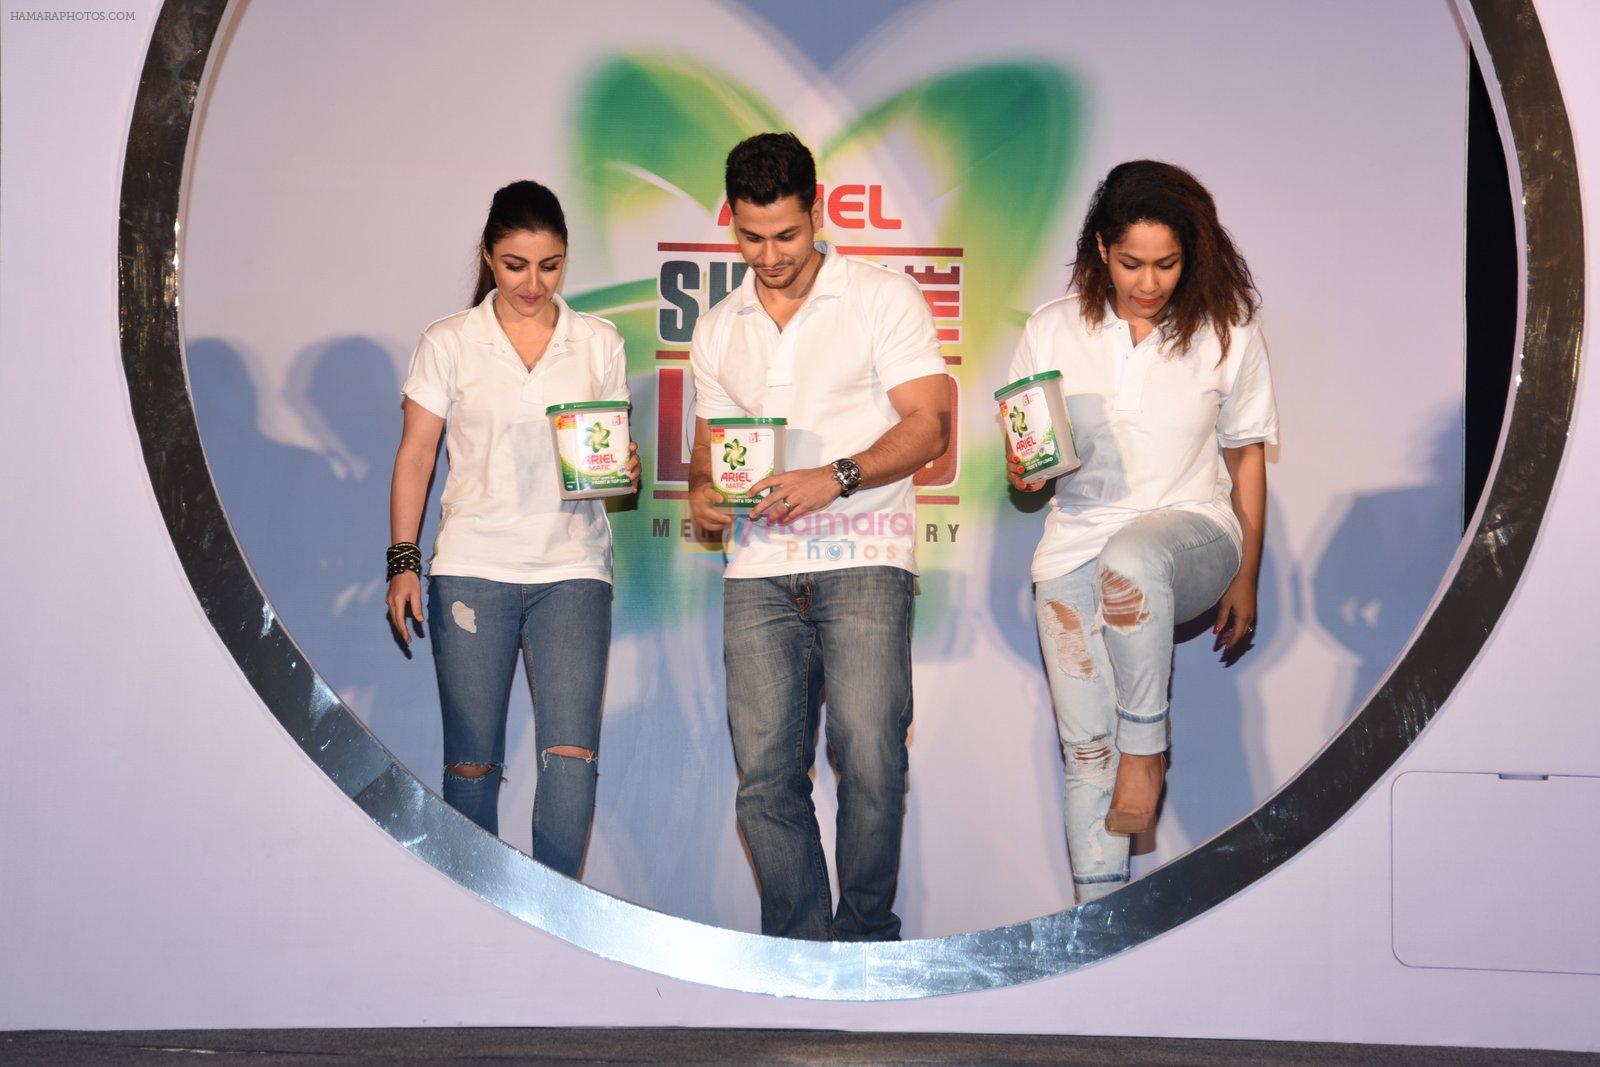 Soha Ali Khan, Kunal Khemu, Masaba at Ariel Share The Load Campaign Launch in Mumbai on 14th April 2015